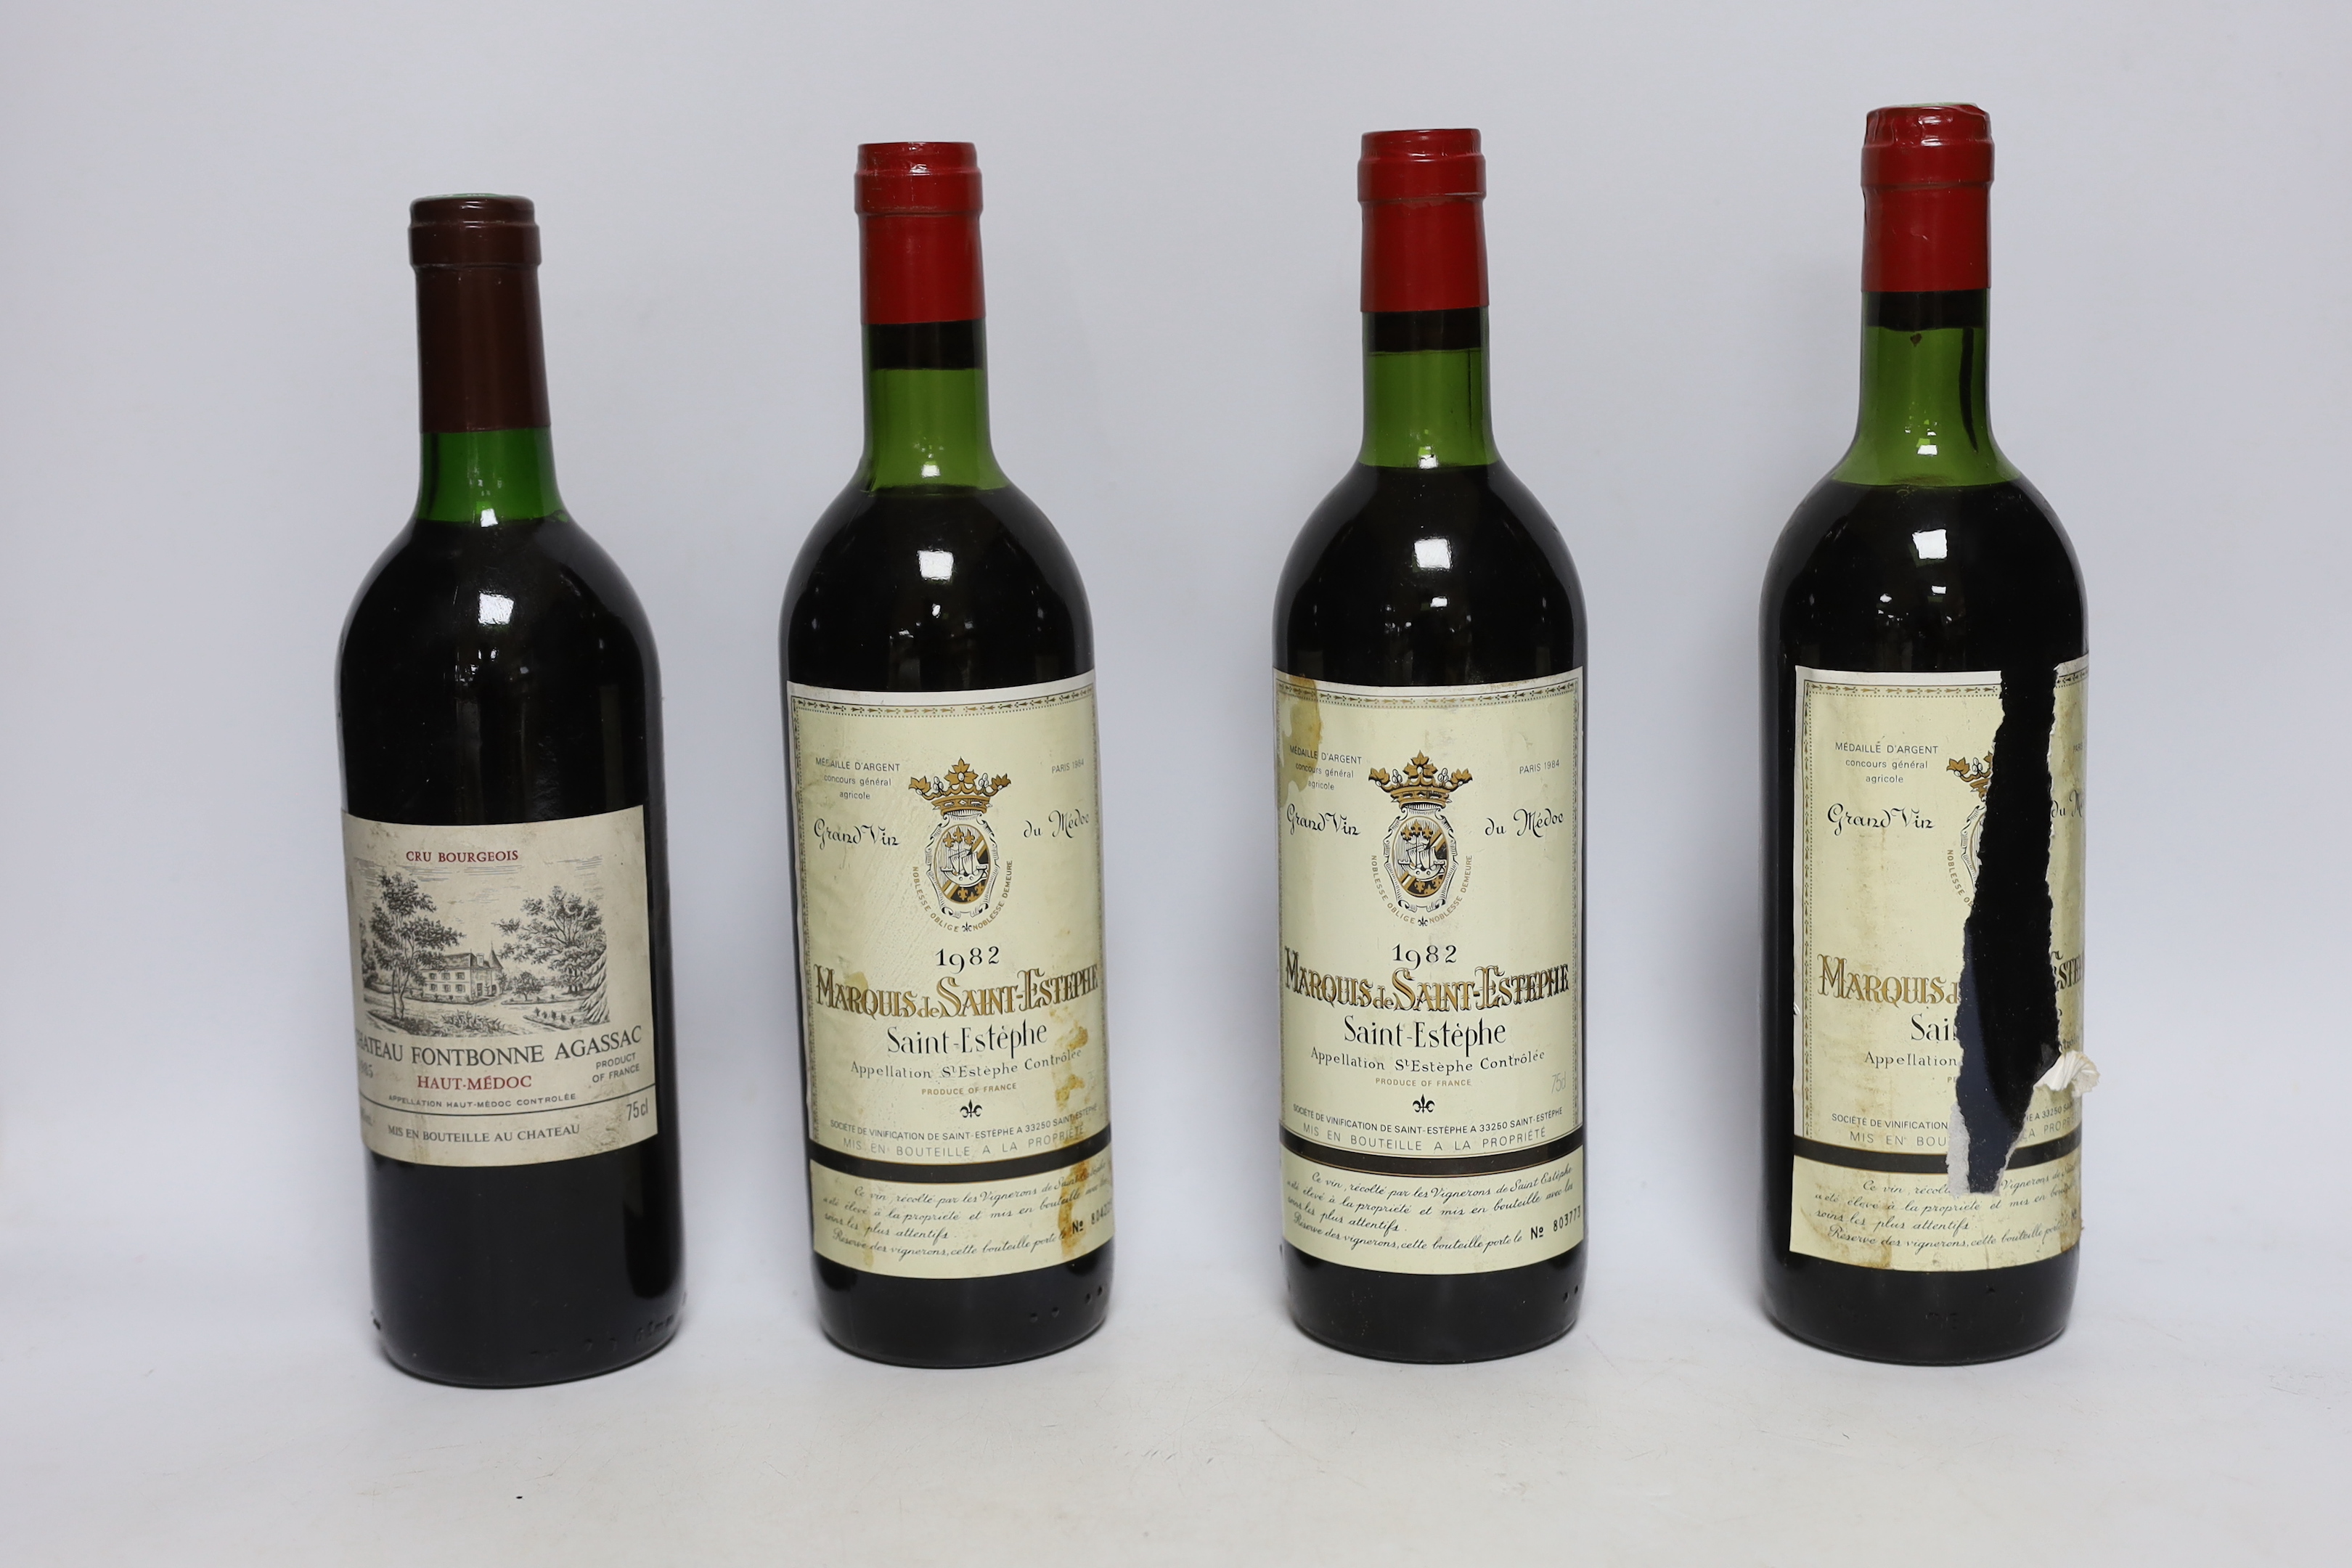 Seven bottles of Saint-Estephe 1982 and three bottles of Haute Medoc 1985 Chateau Fondbonne Agassac and one bottle Medoc 1984 Chateau Plagnac, wine